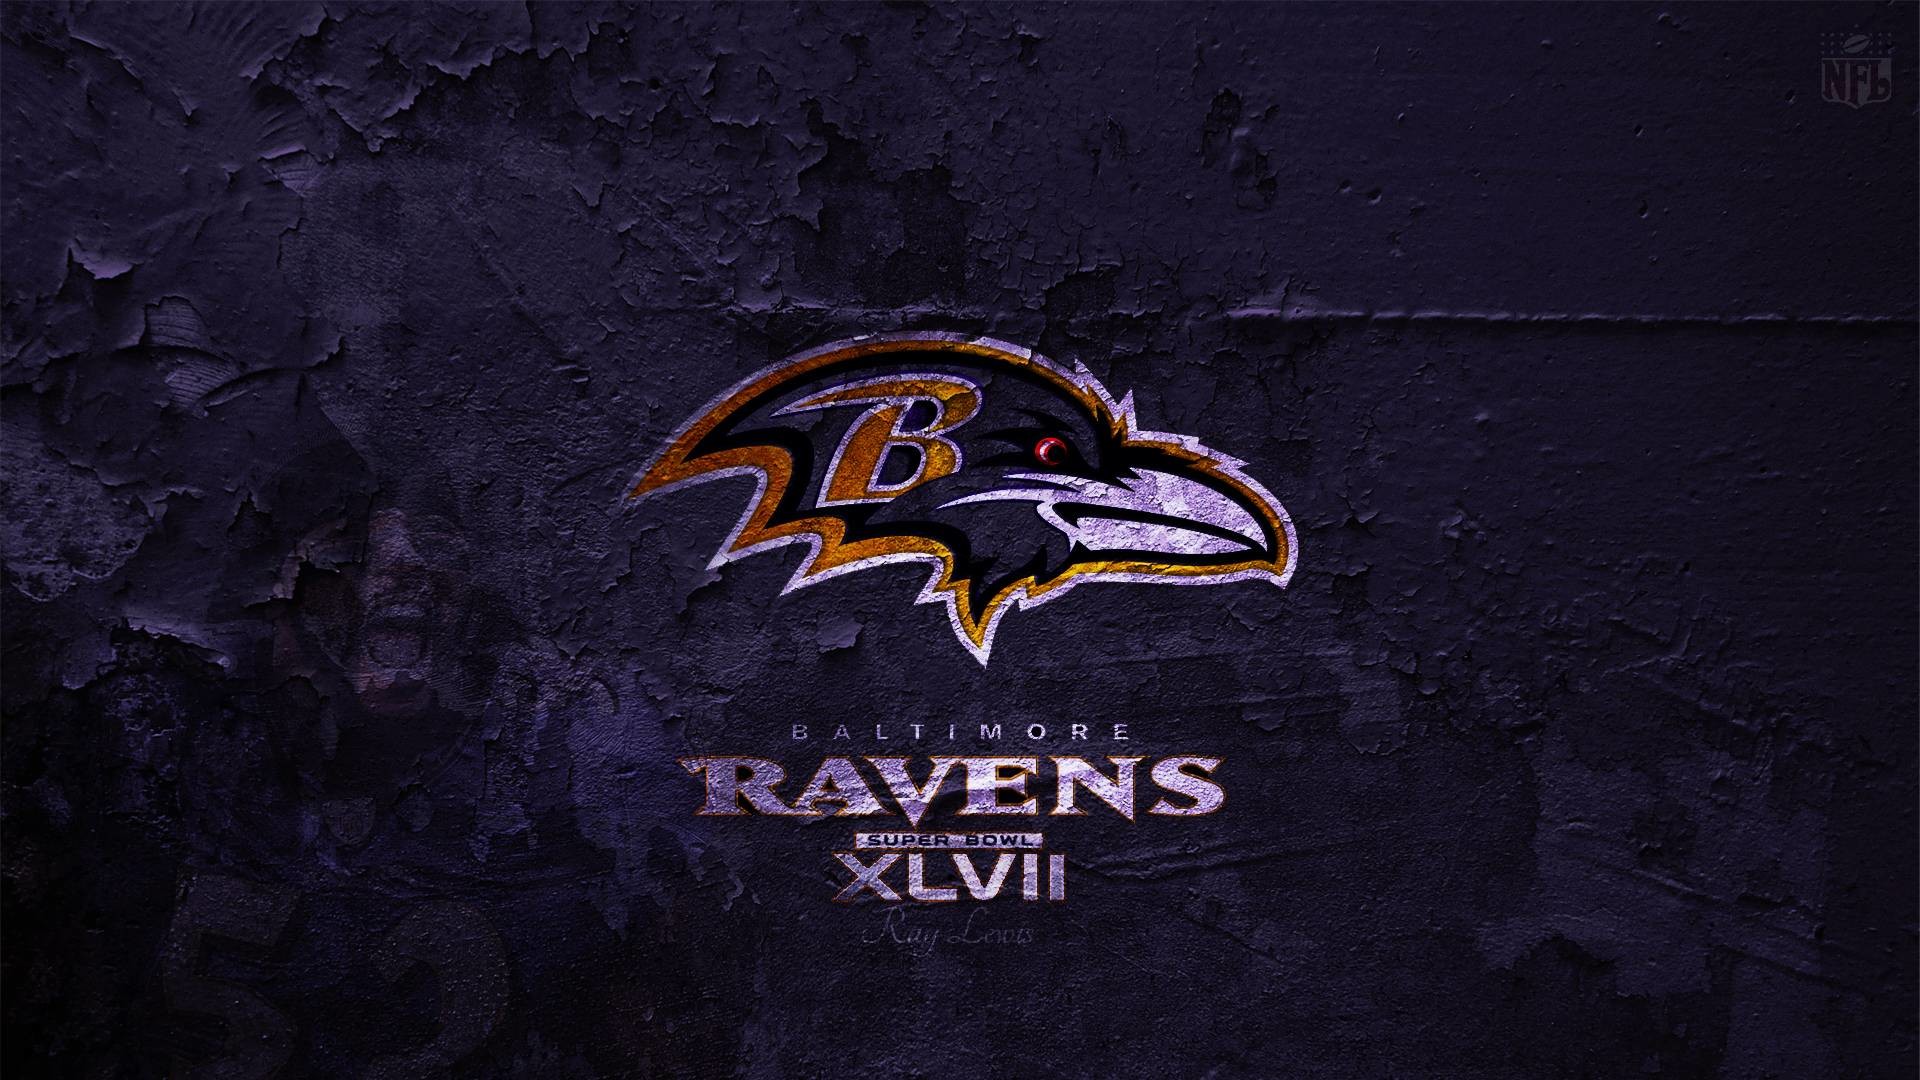 1920x1080 Wallpaper of the day: Baltimore Ravens | Baltimore Ravens wallpapers